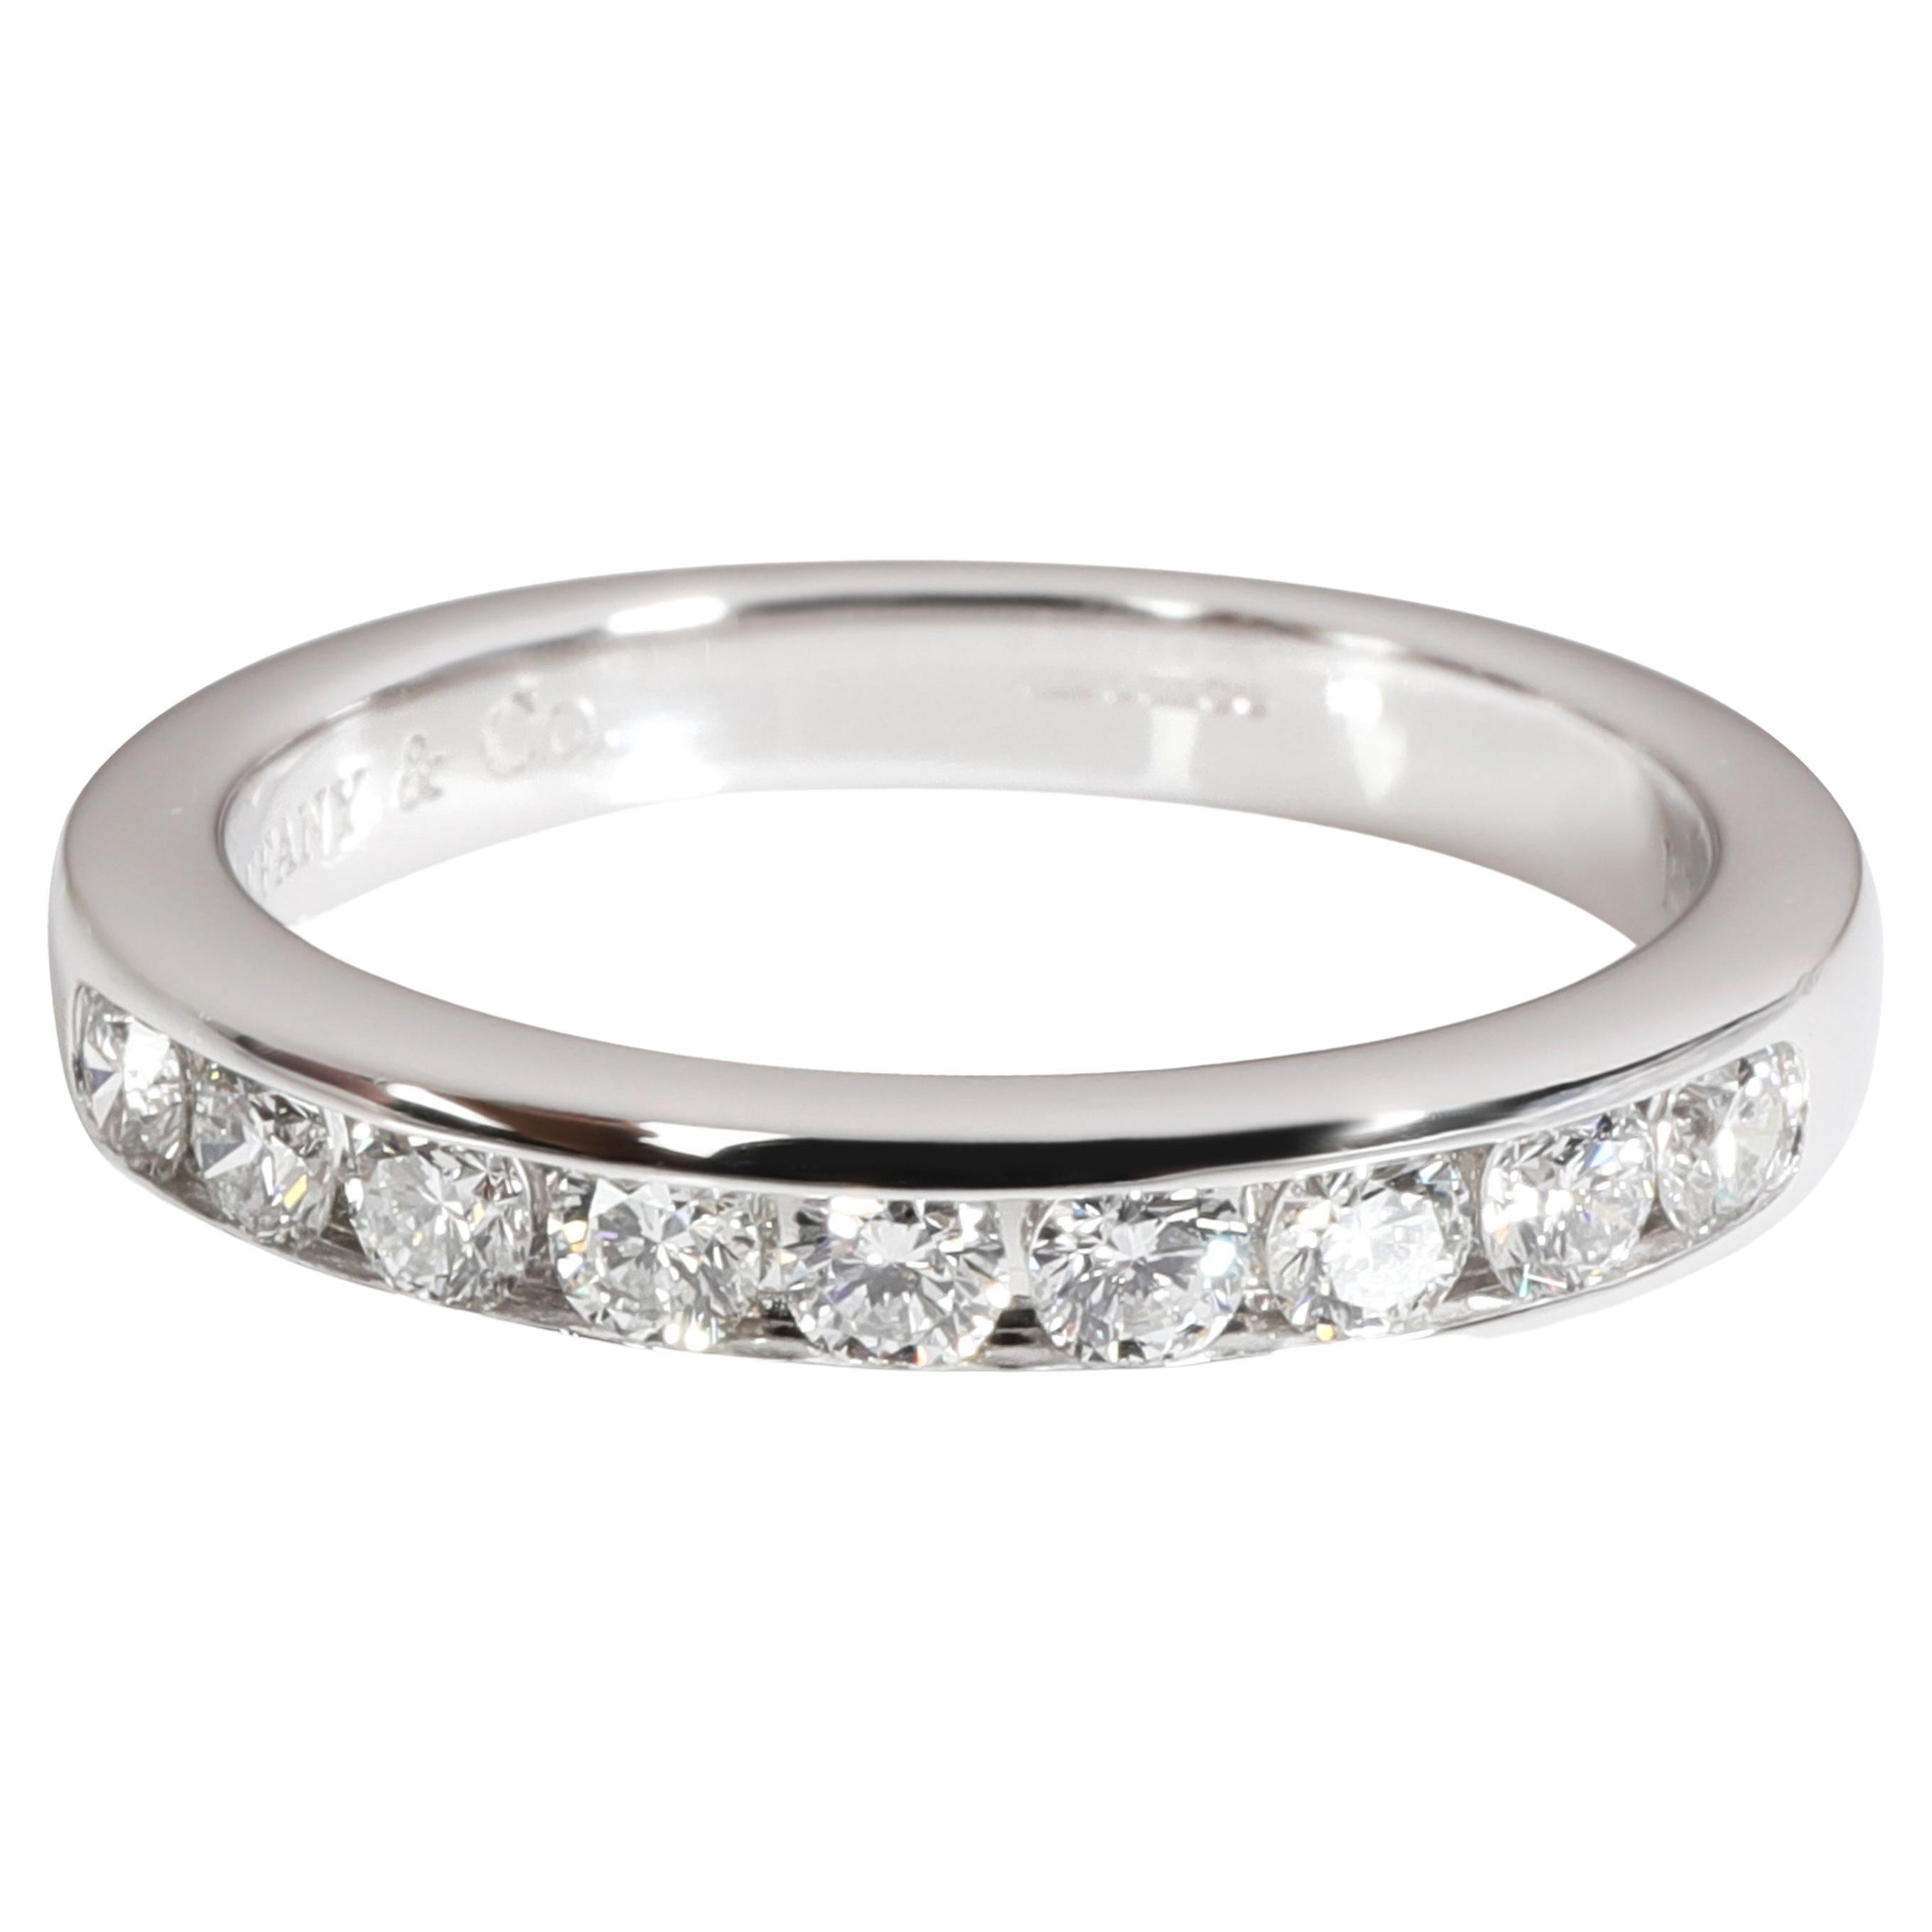 Tiffany & Co. Channel Set Diamond Wedding Band in Platinum 0.35 CTW